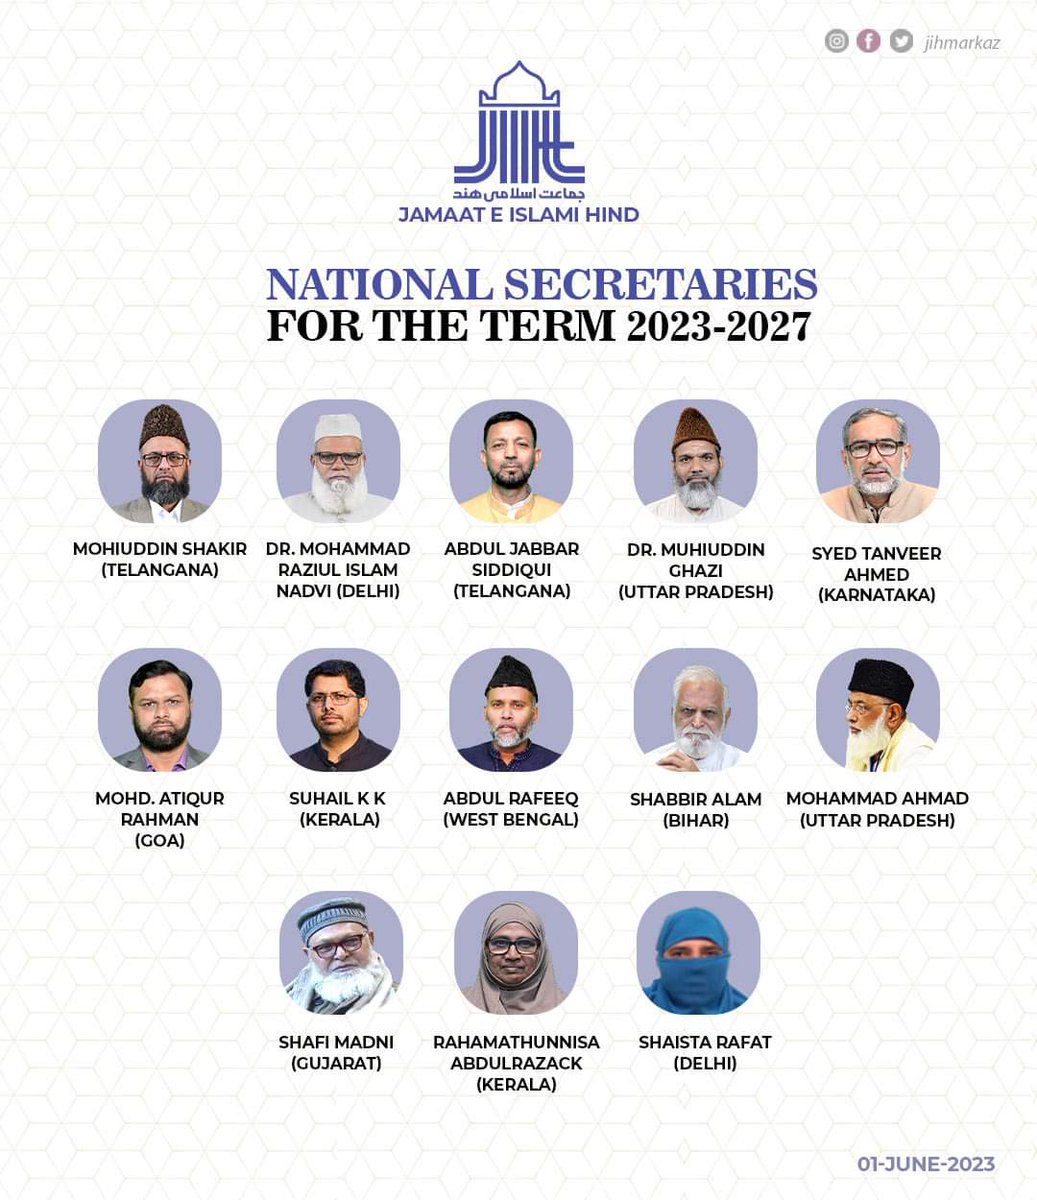 National Secretaries for the term 2023-2027

#JamaateIslamiHind